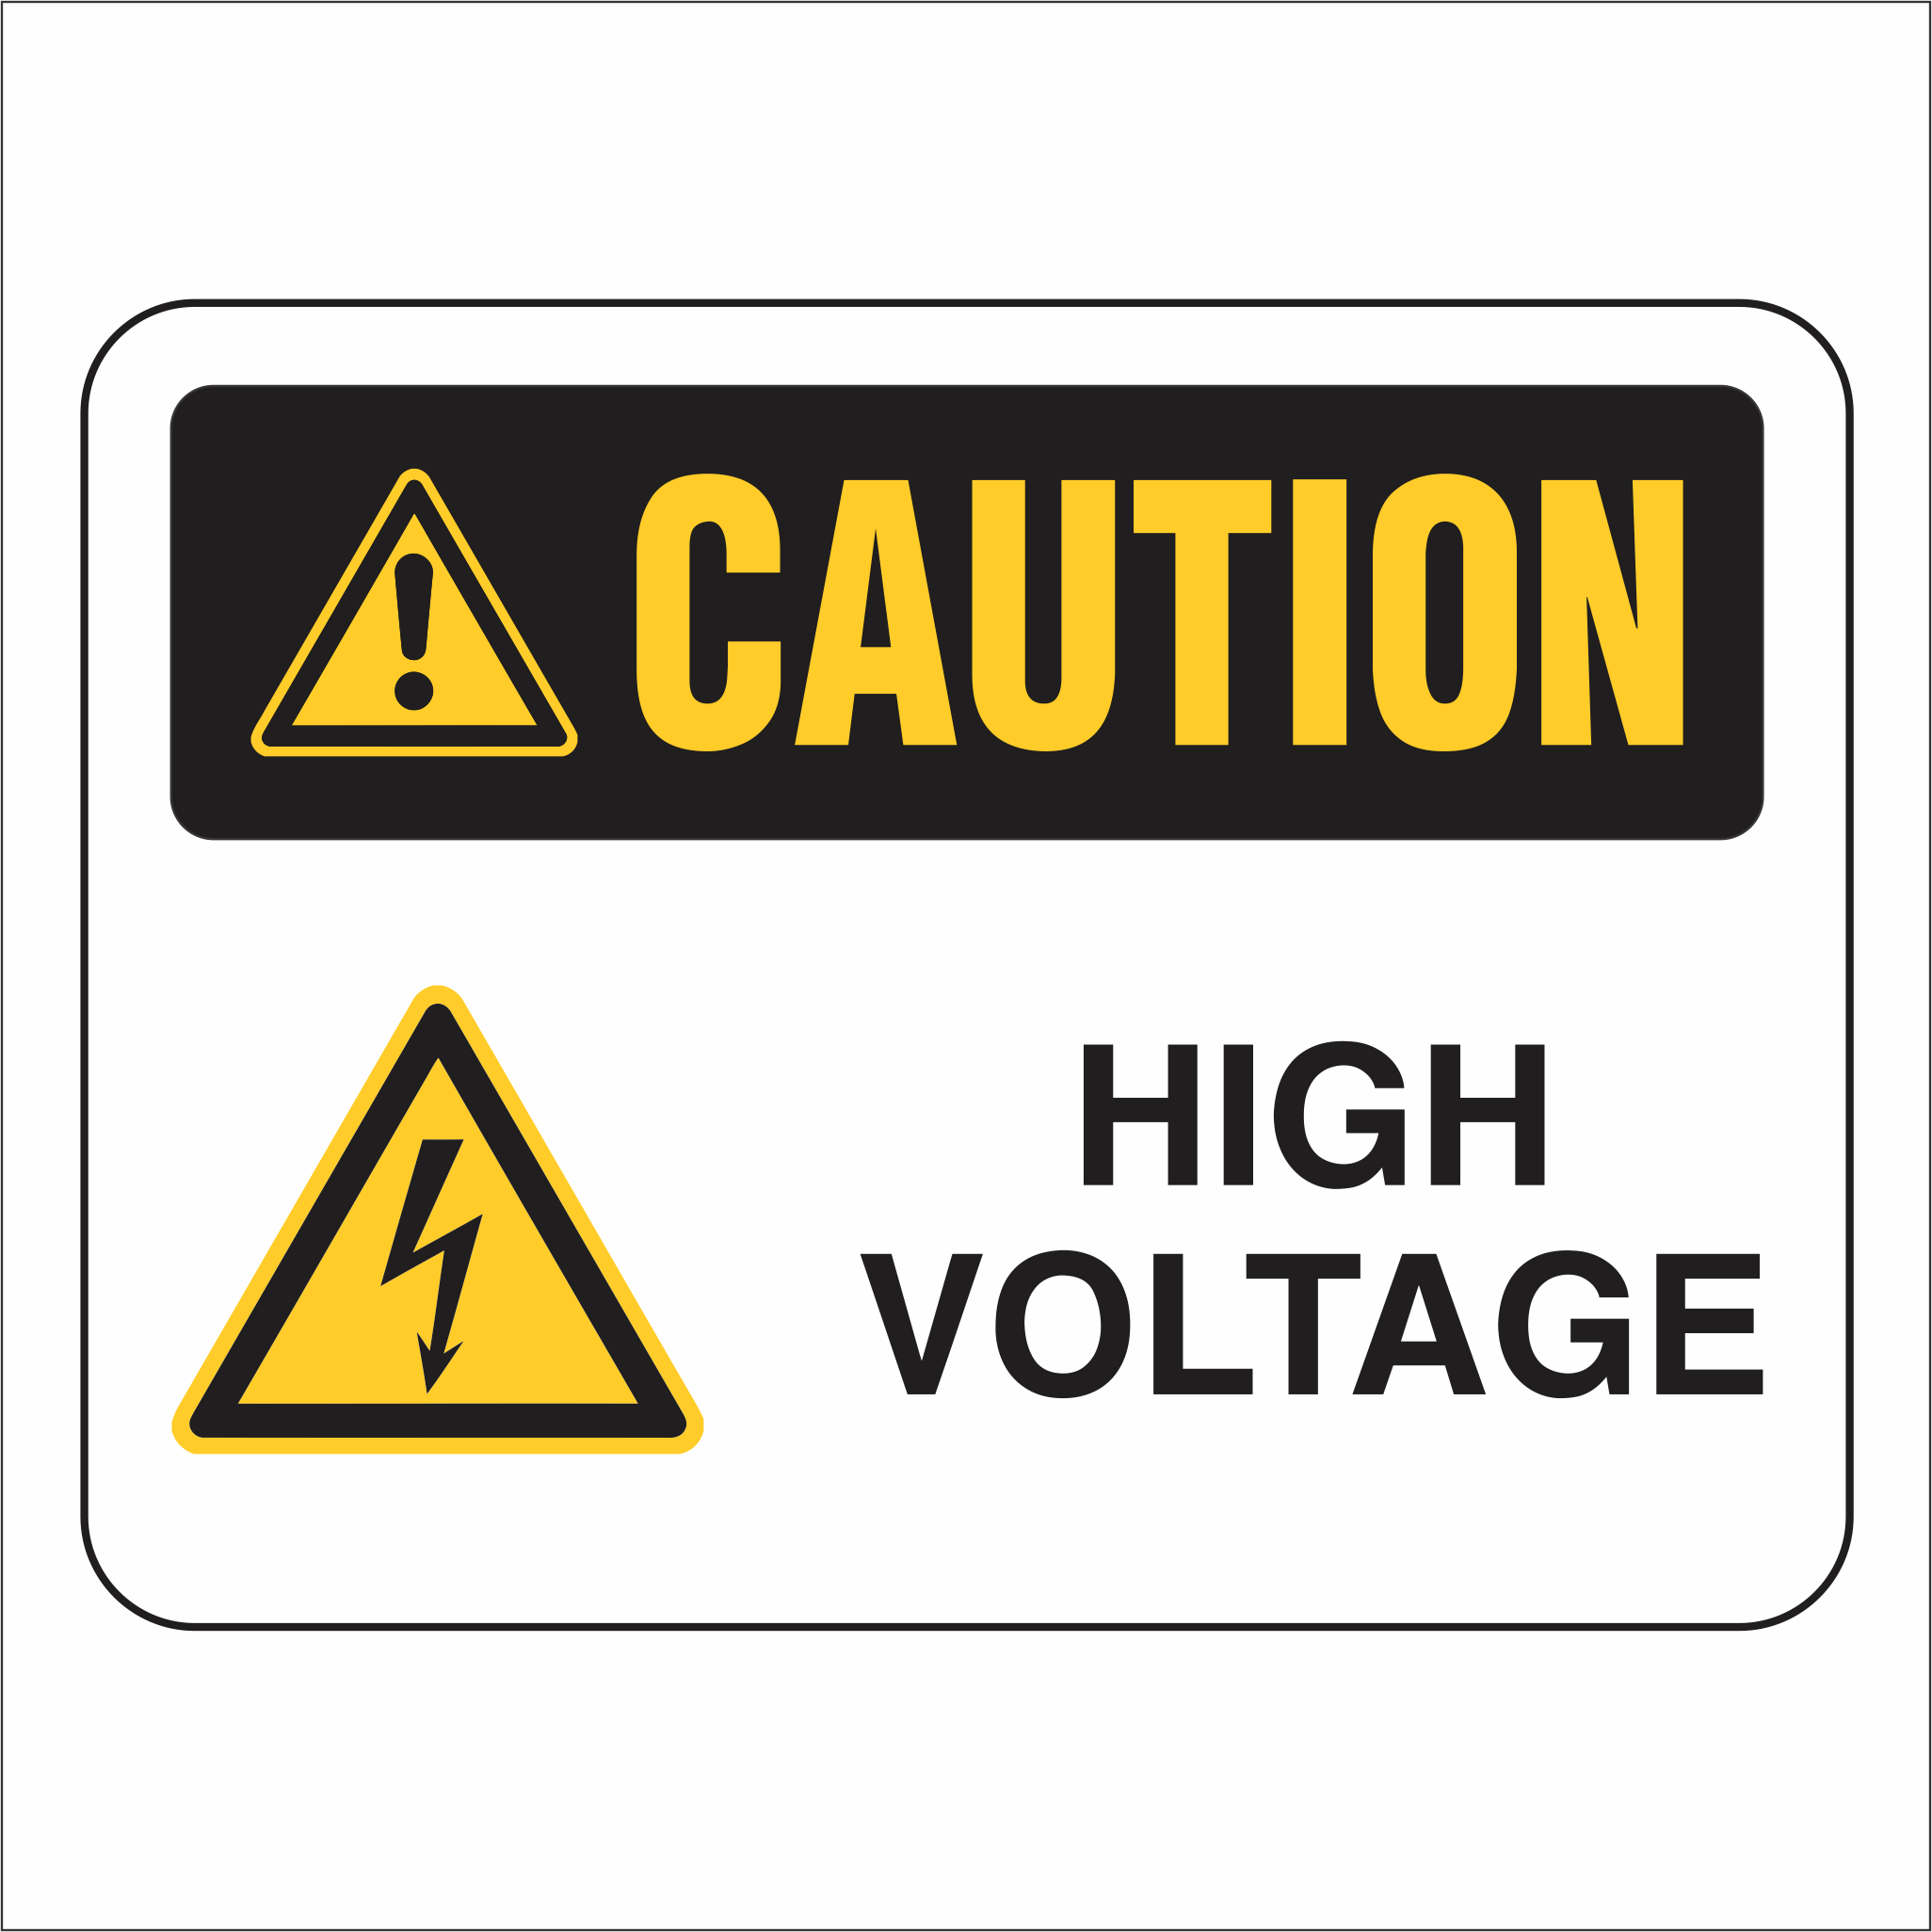 High Voltage - Caution - Sign